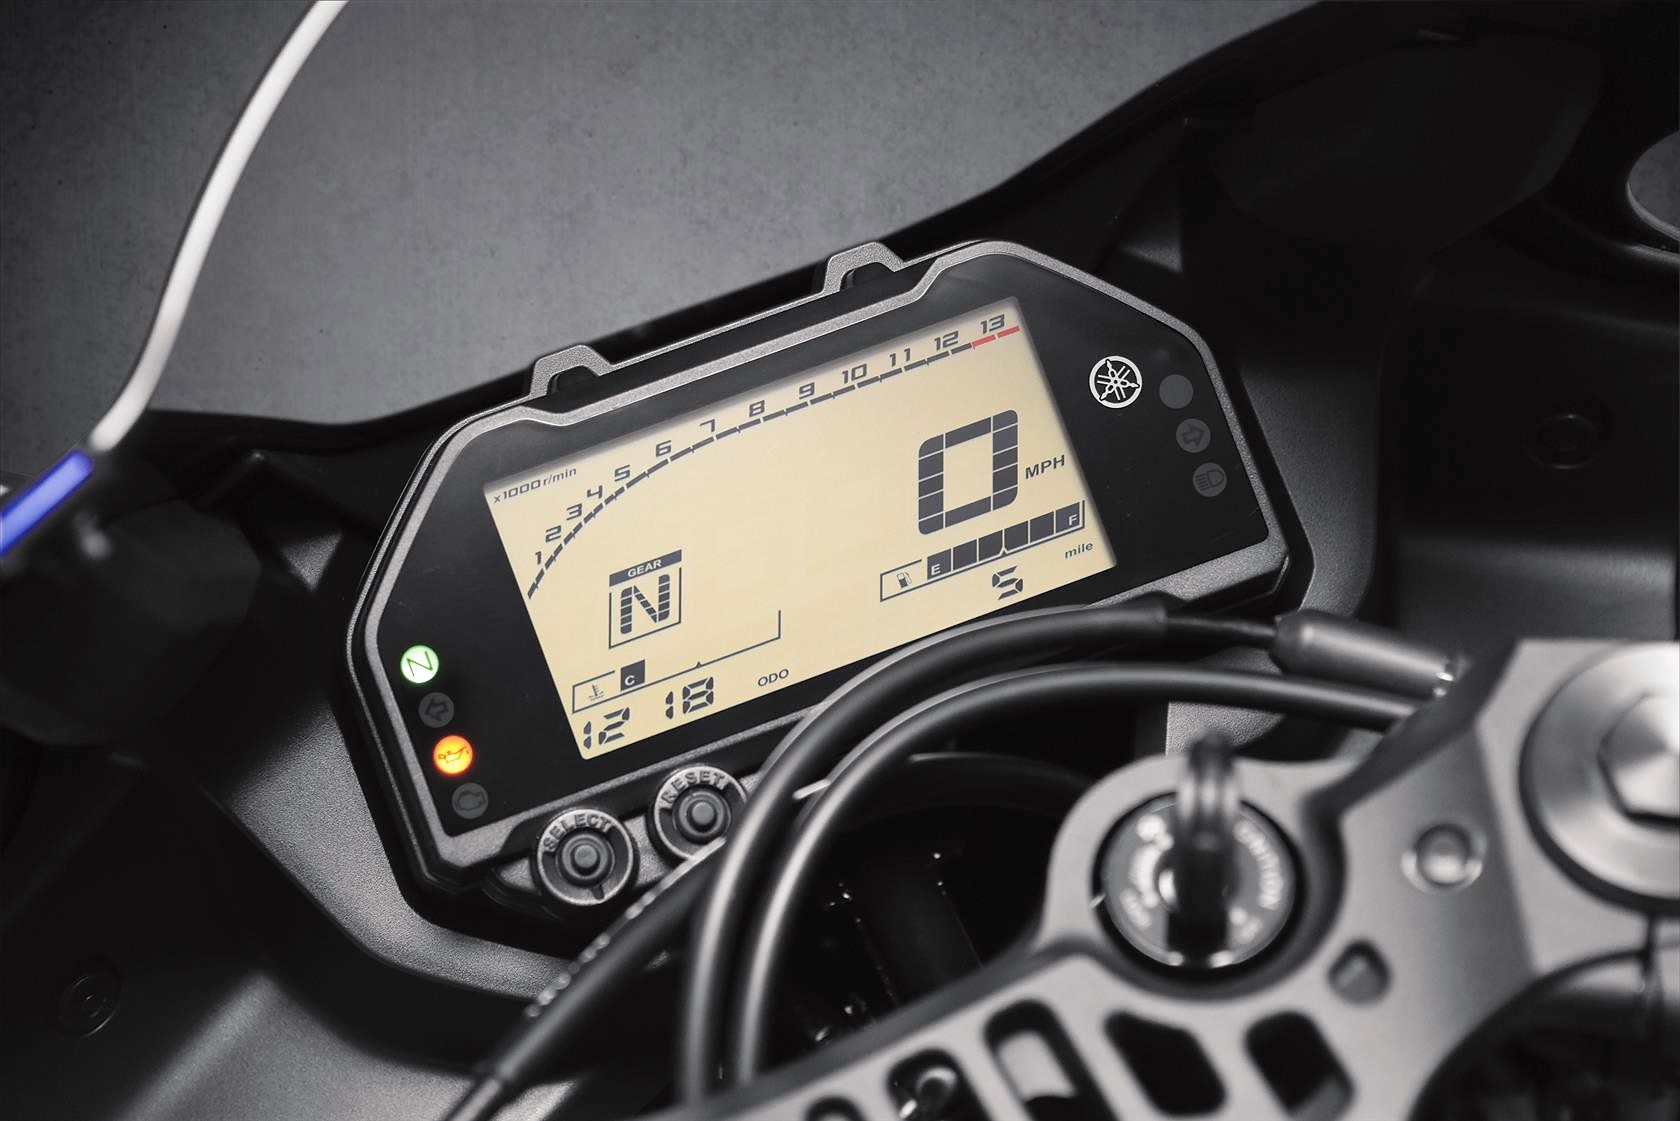 2019 Yamaha R3 New All-Digital Console